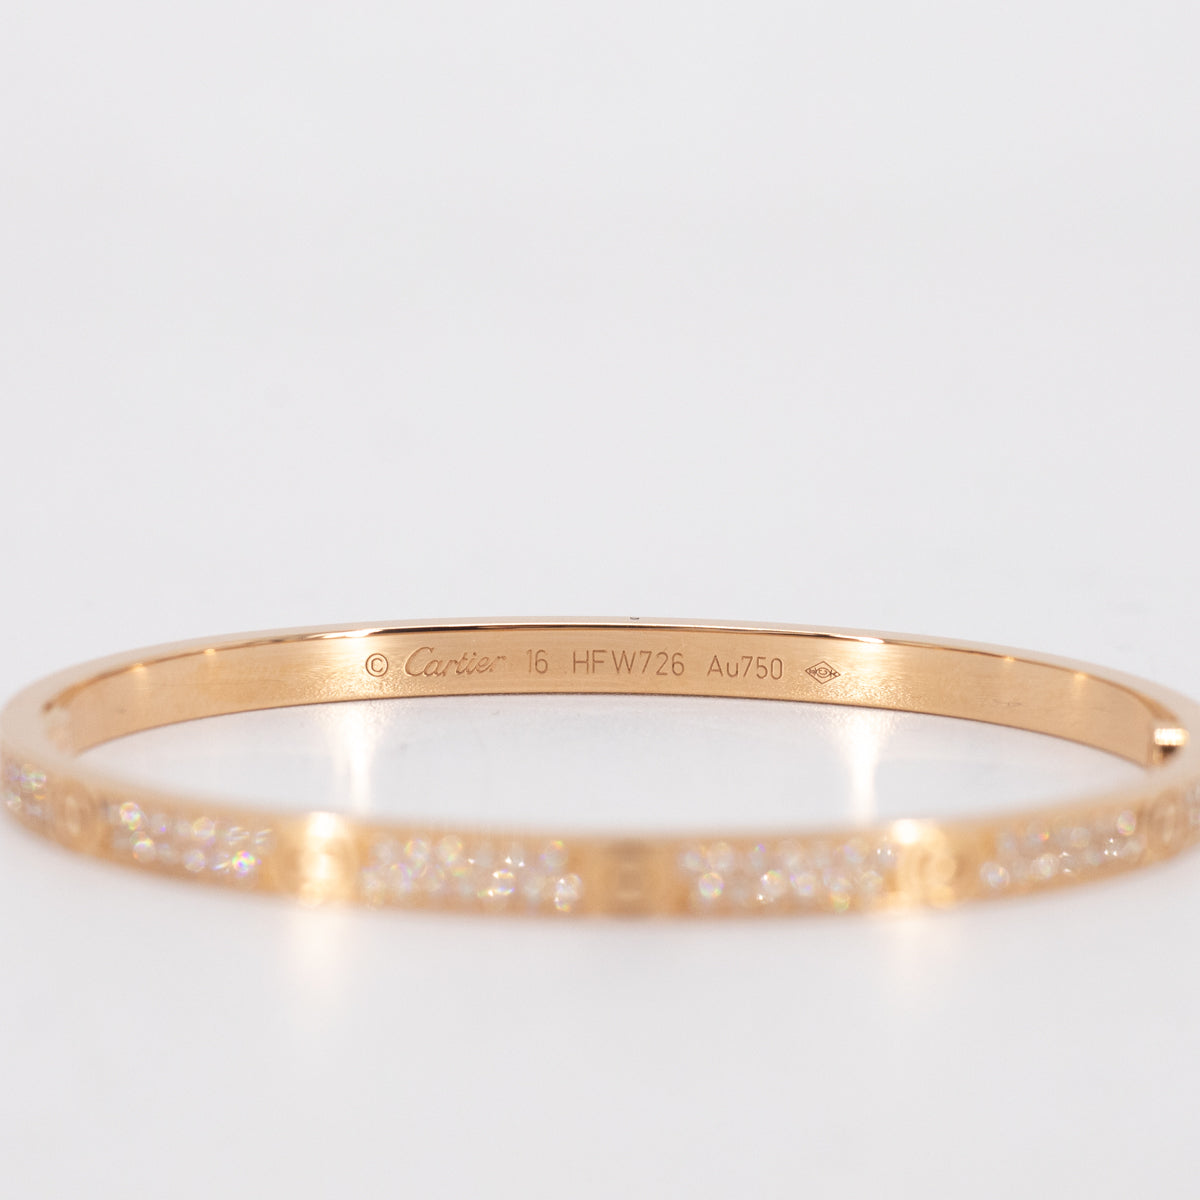 Cartier Love Bracelet SM Bangle 18K Pink Gold 750 Size16 90190551